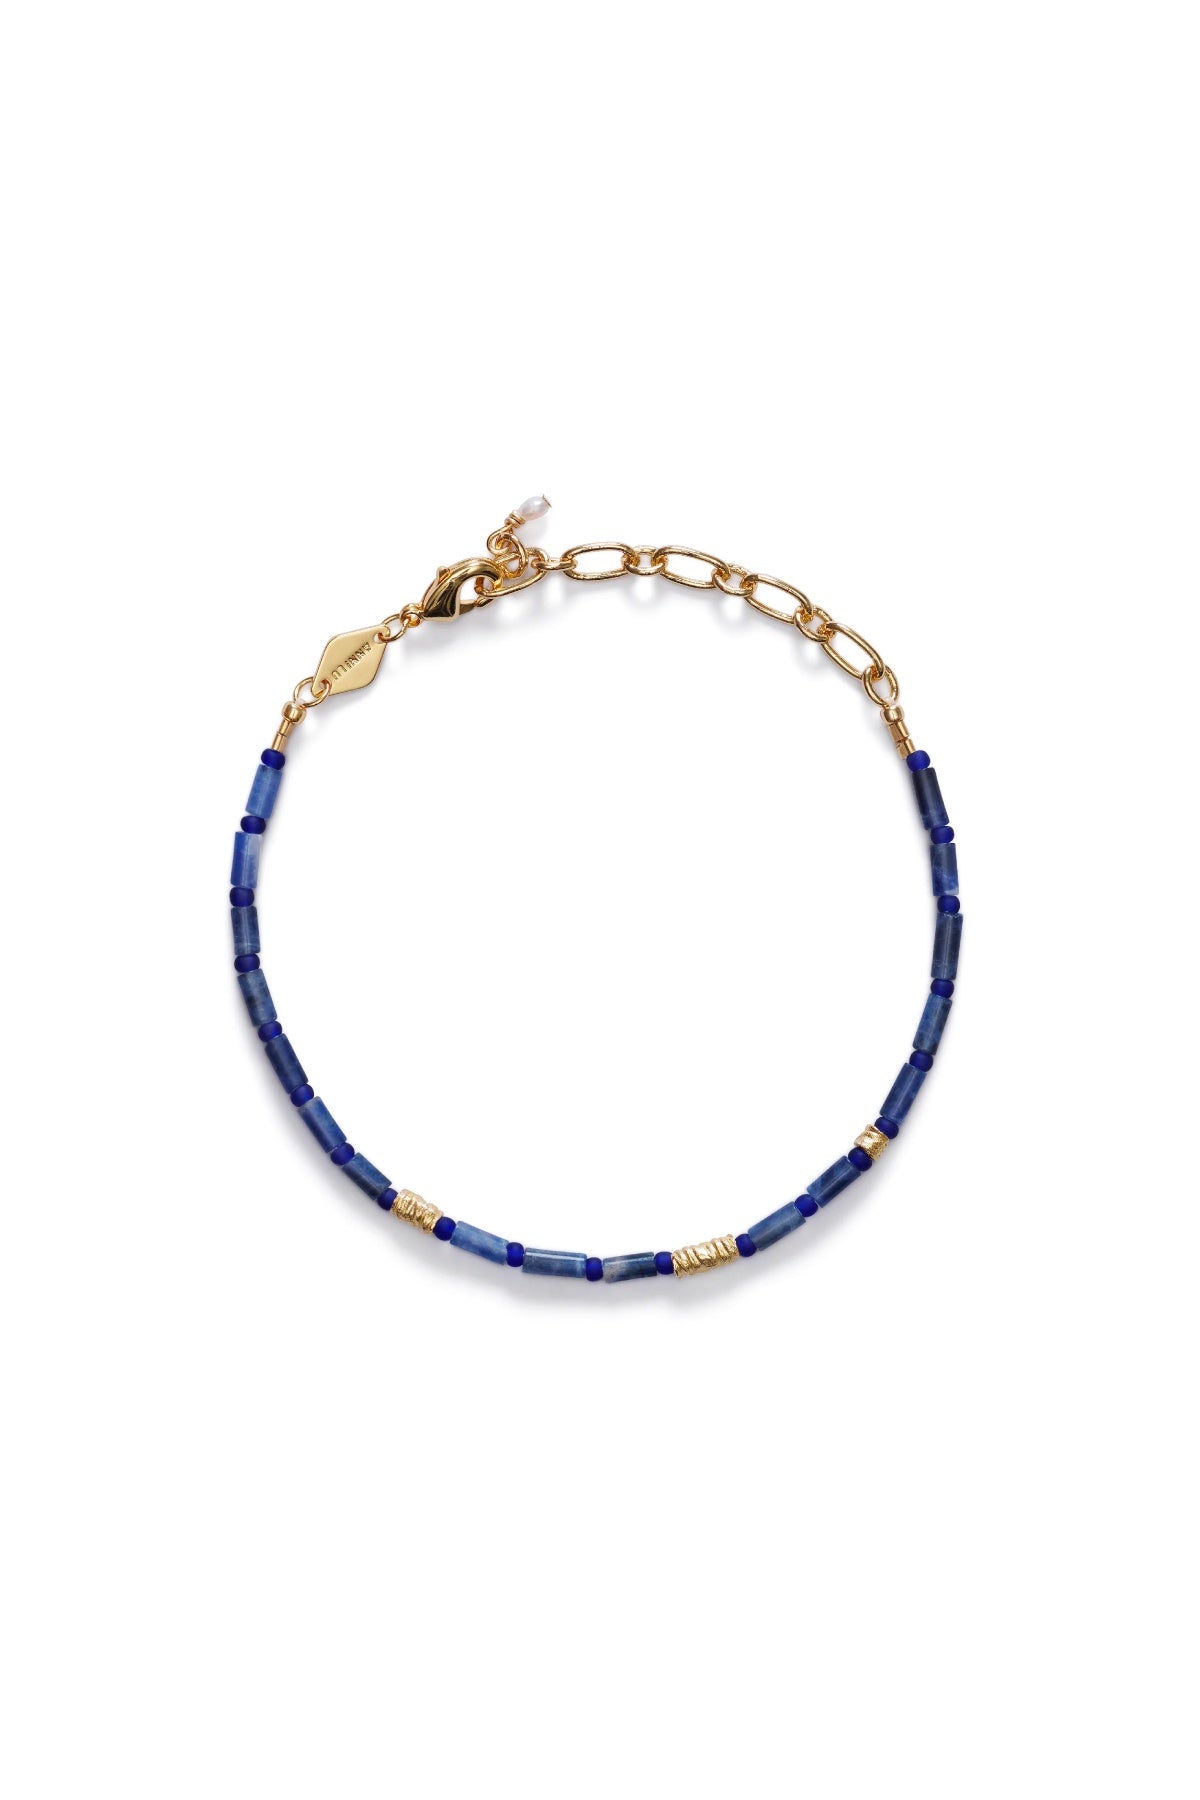 Anni Lu Azzurro Bracelet - Blue Ocean